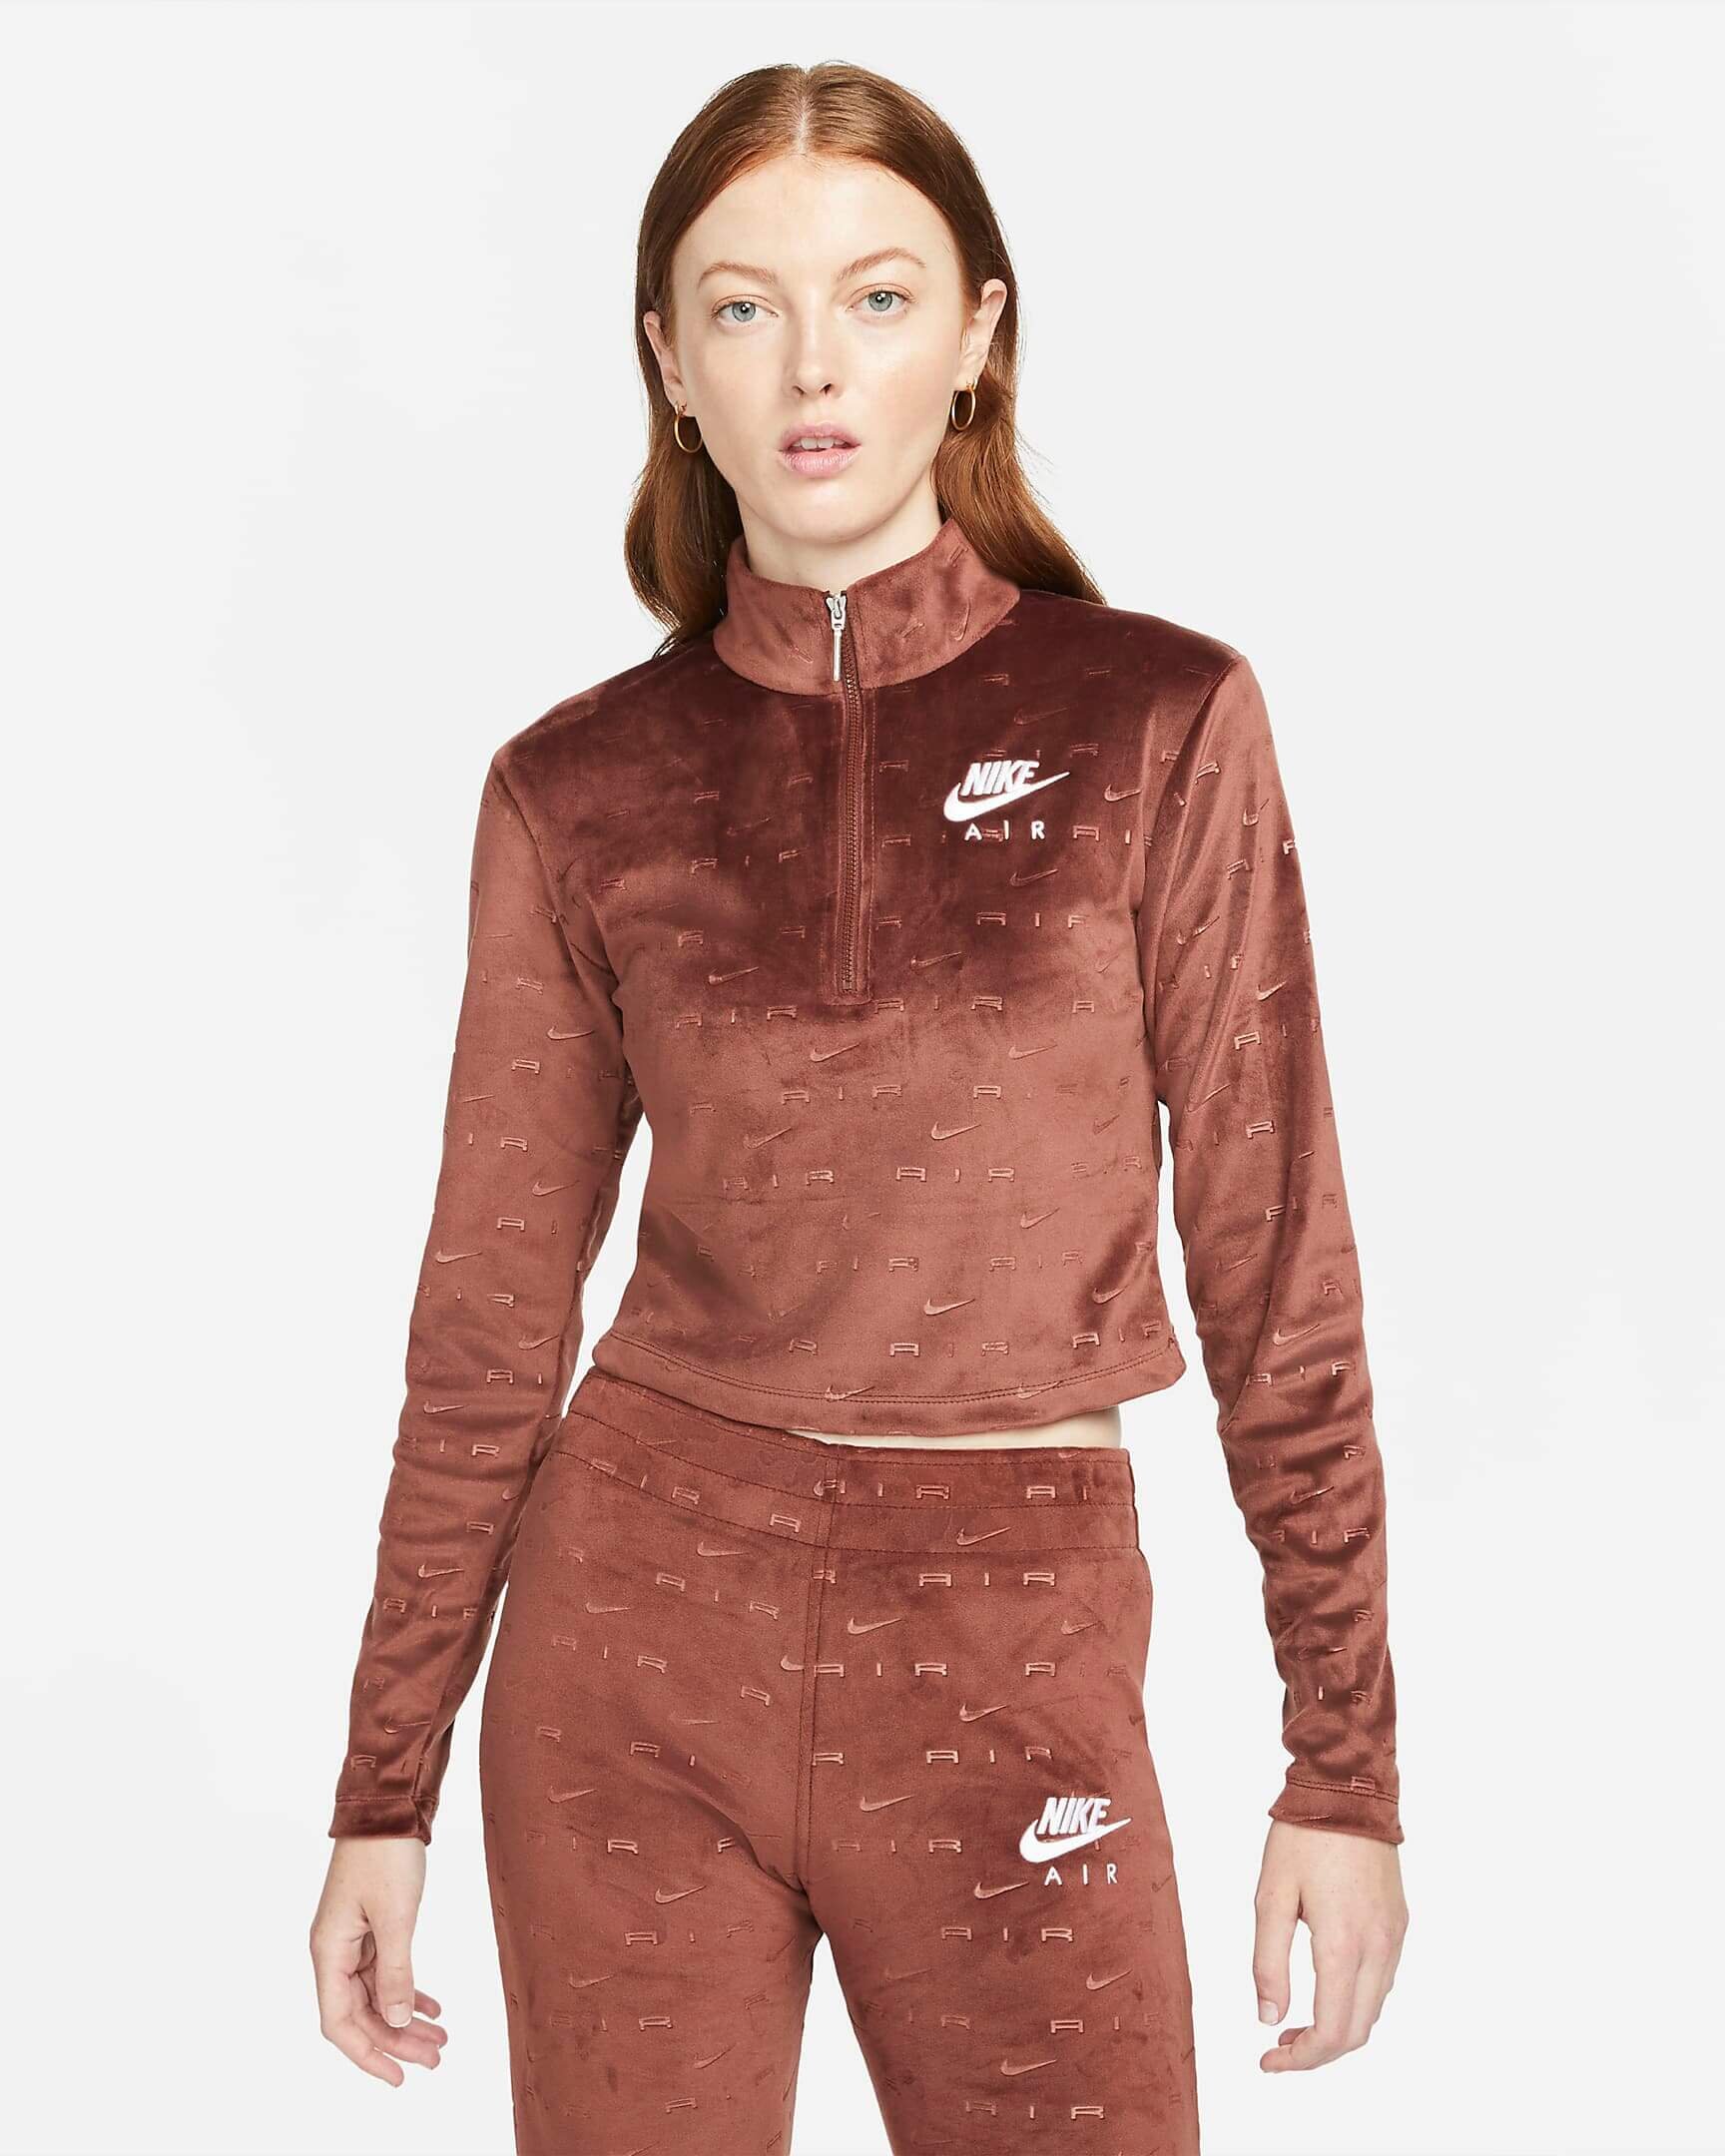 CNK-Nike-womens-velour-1-4-zip-long-sleeve-top-bronze-eclipse.jpeg